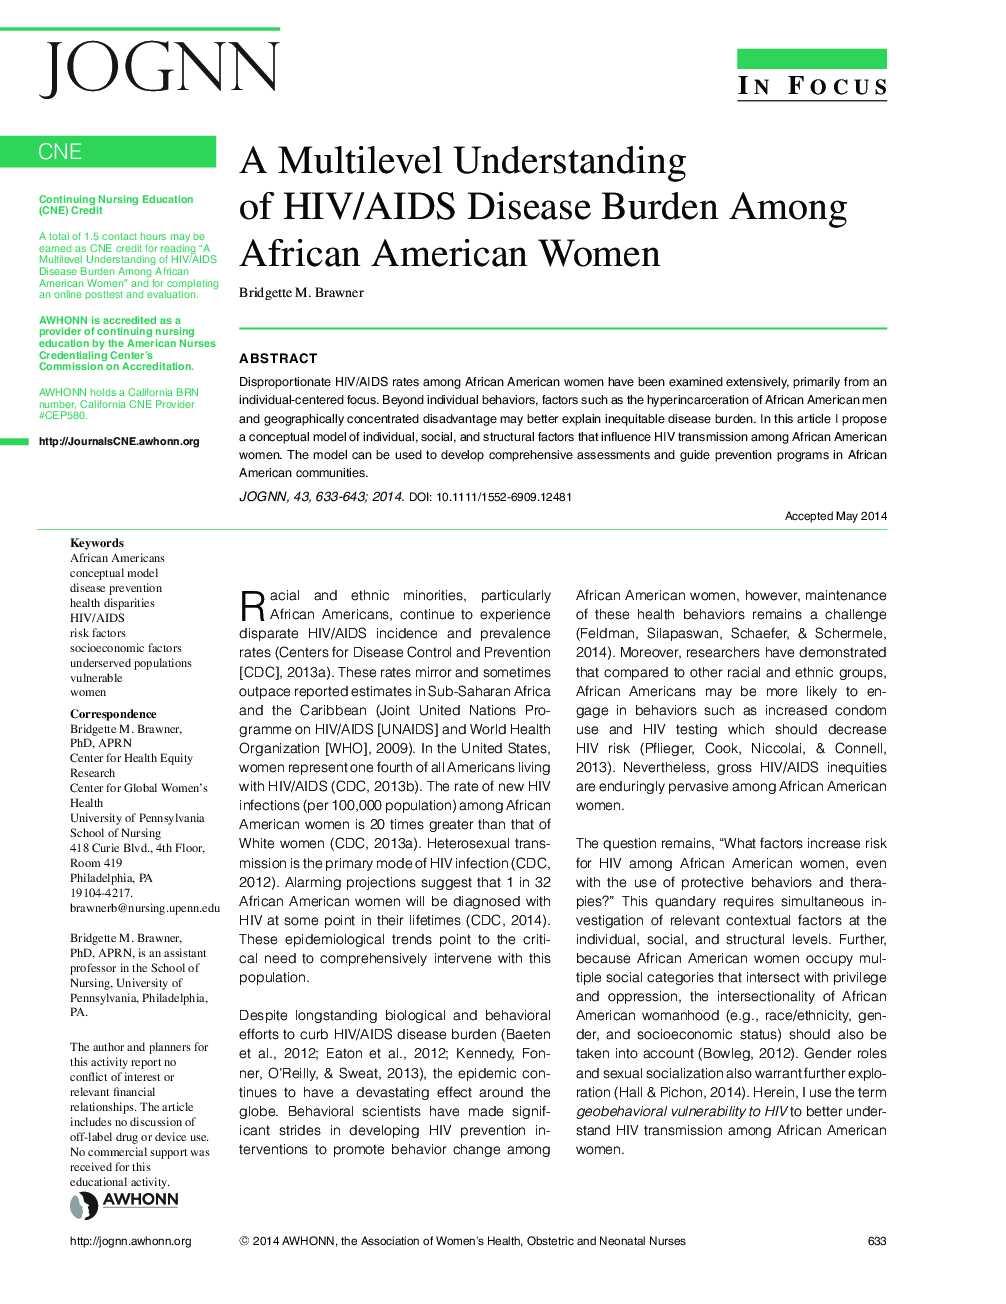 A Multilevel Understanding of HIV/AIDS Disease Burden Among African American Women